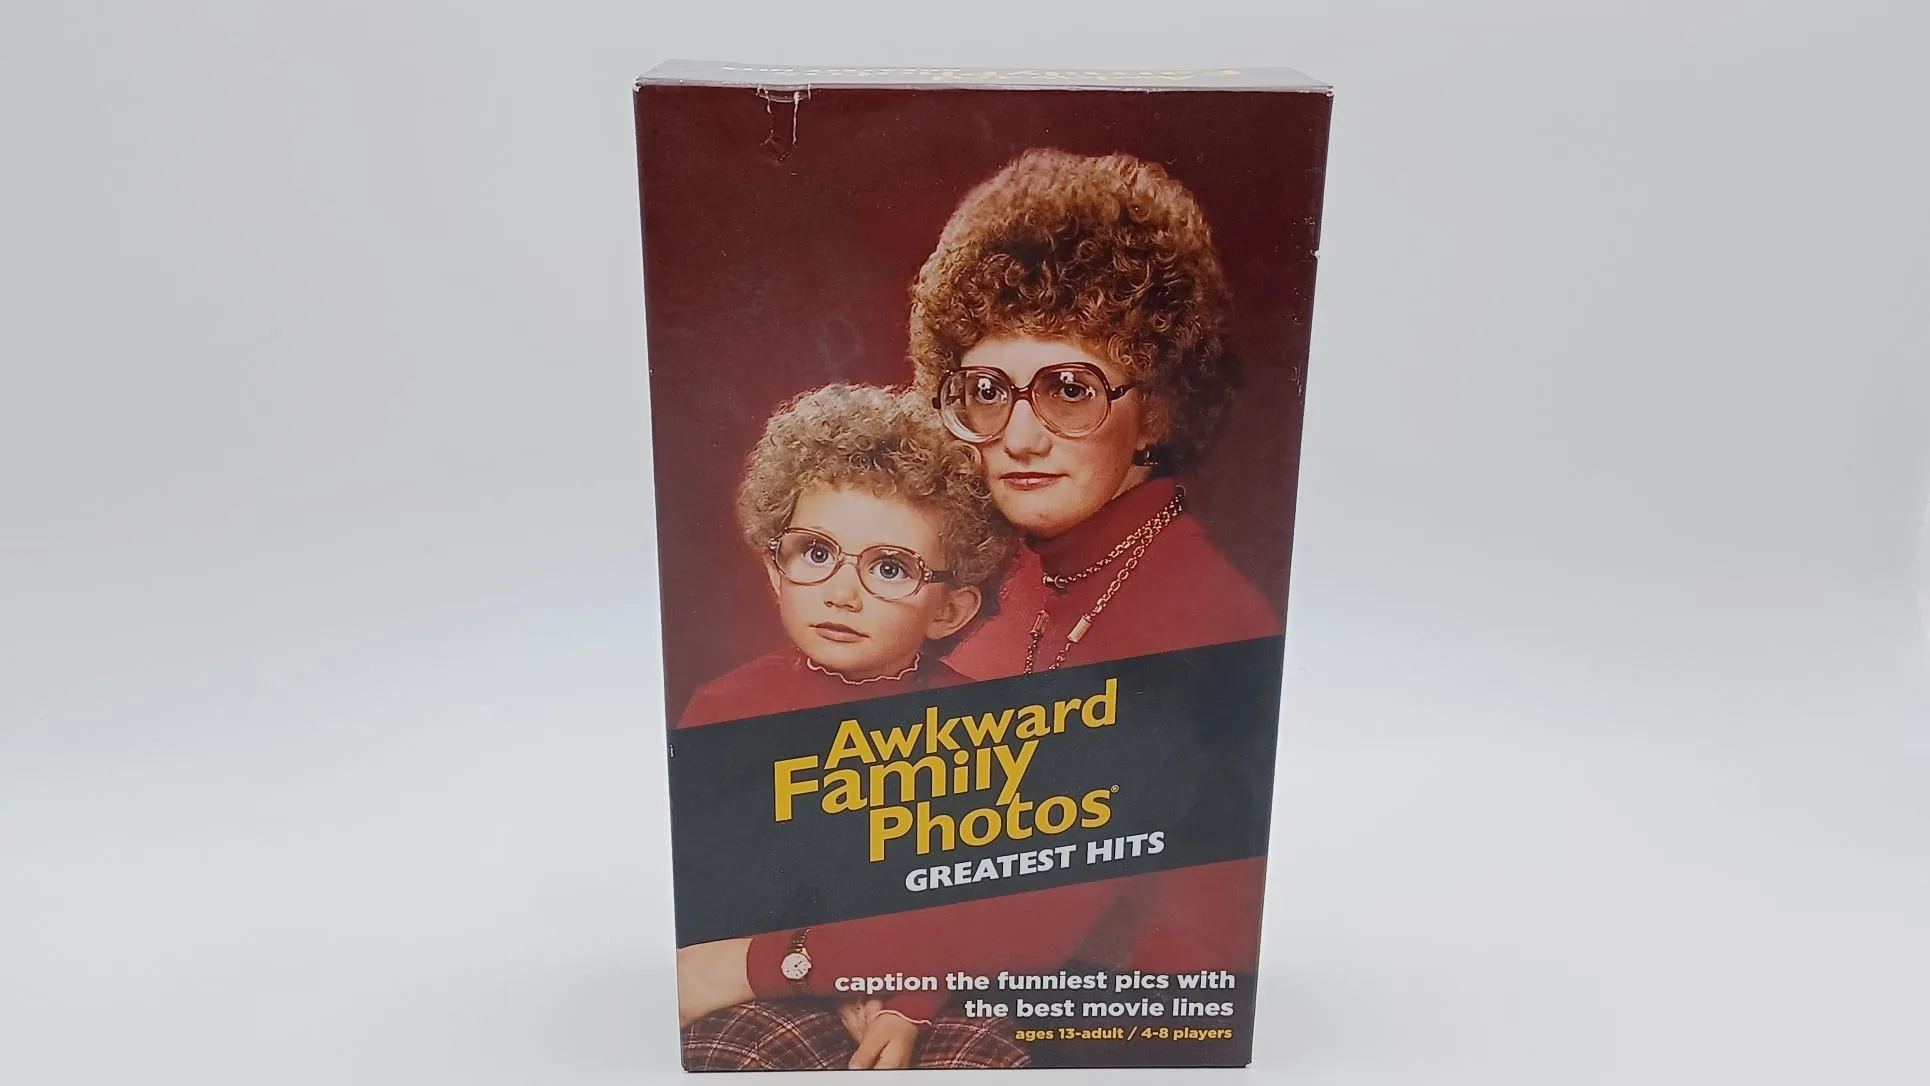 Box for Awkward Family Photos Greatest Hits